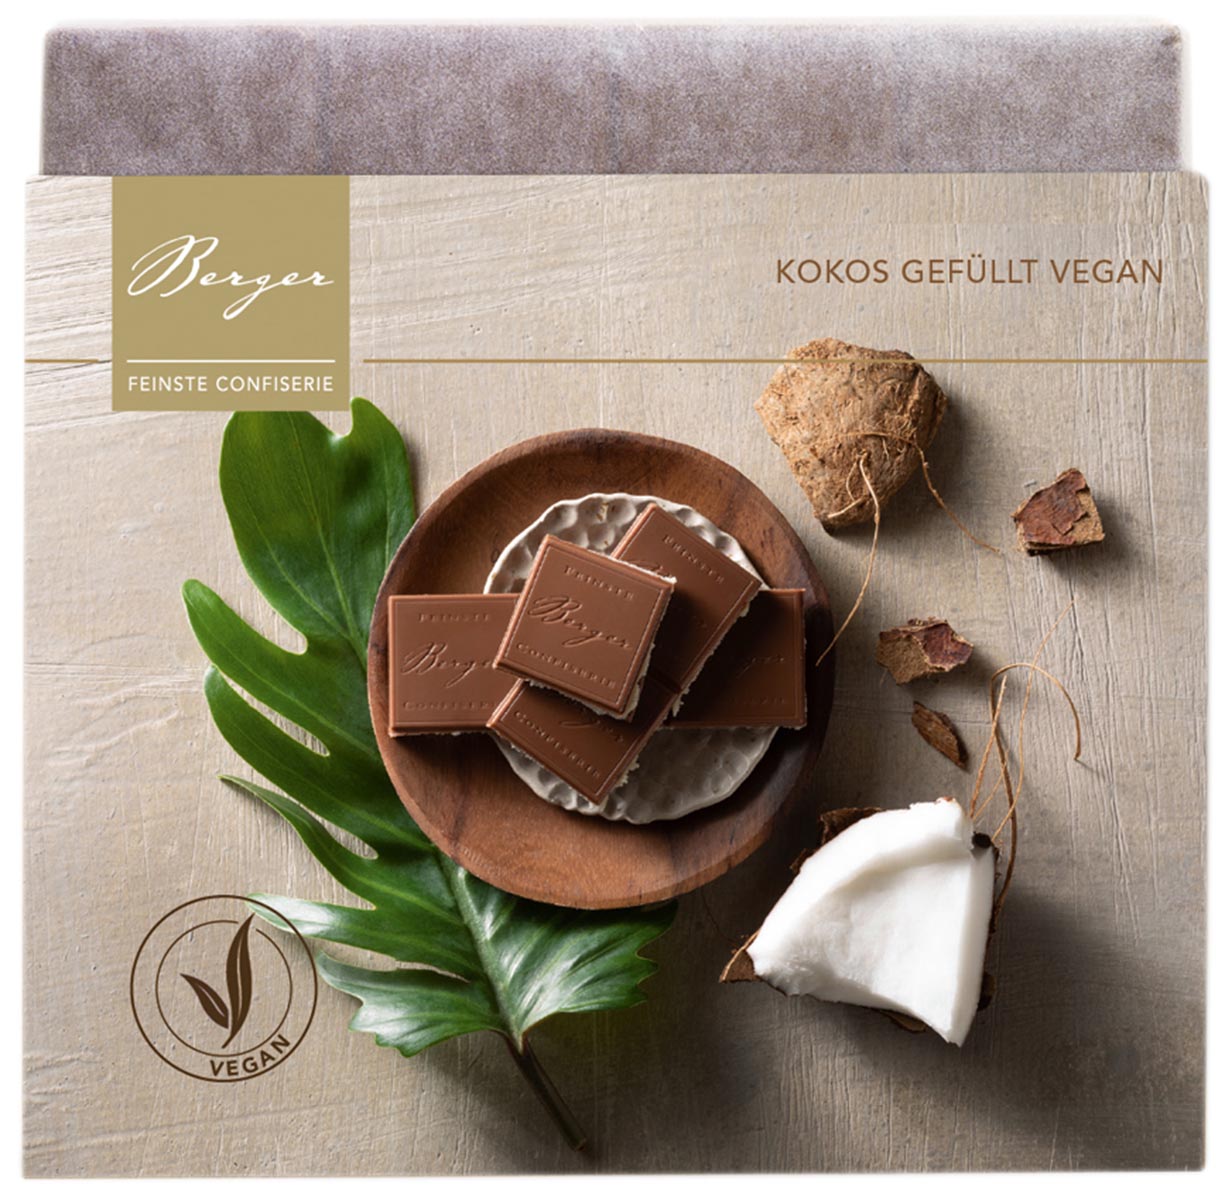 Vegane Schokolade mit Kokos gefüllt